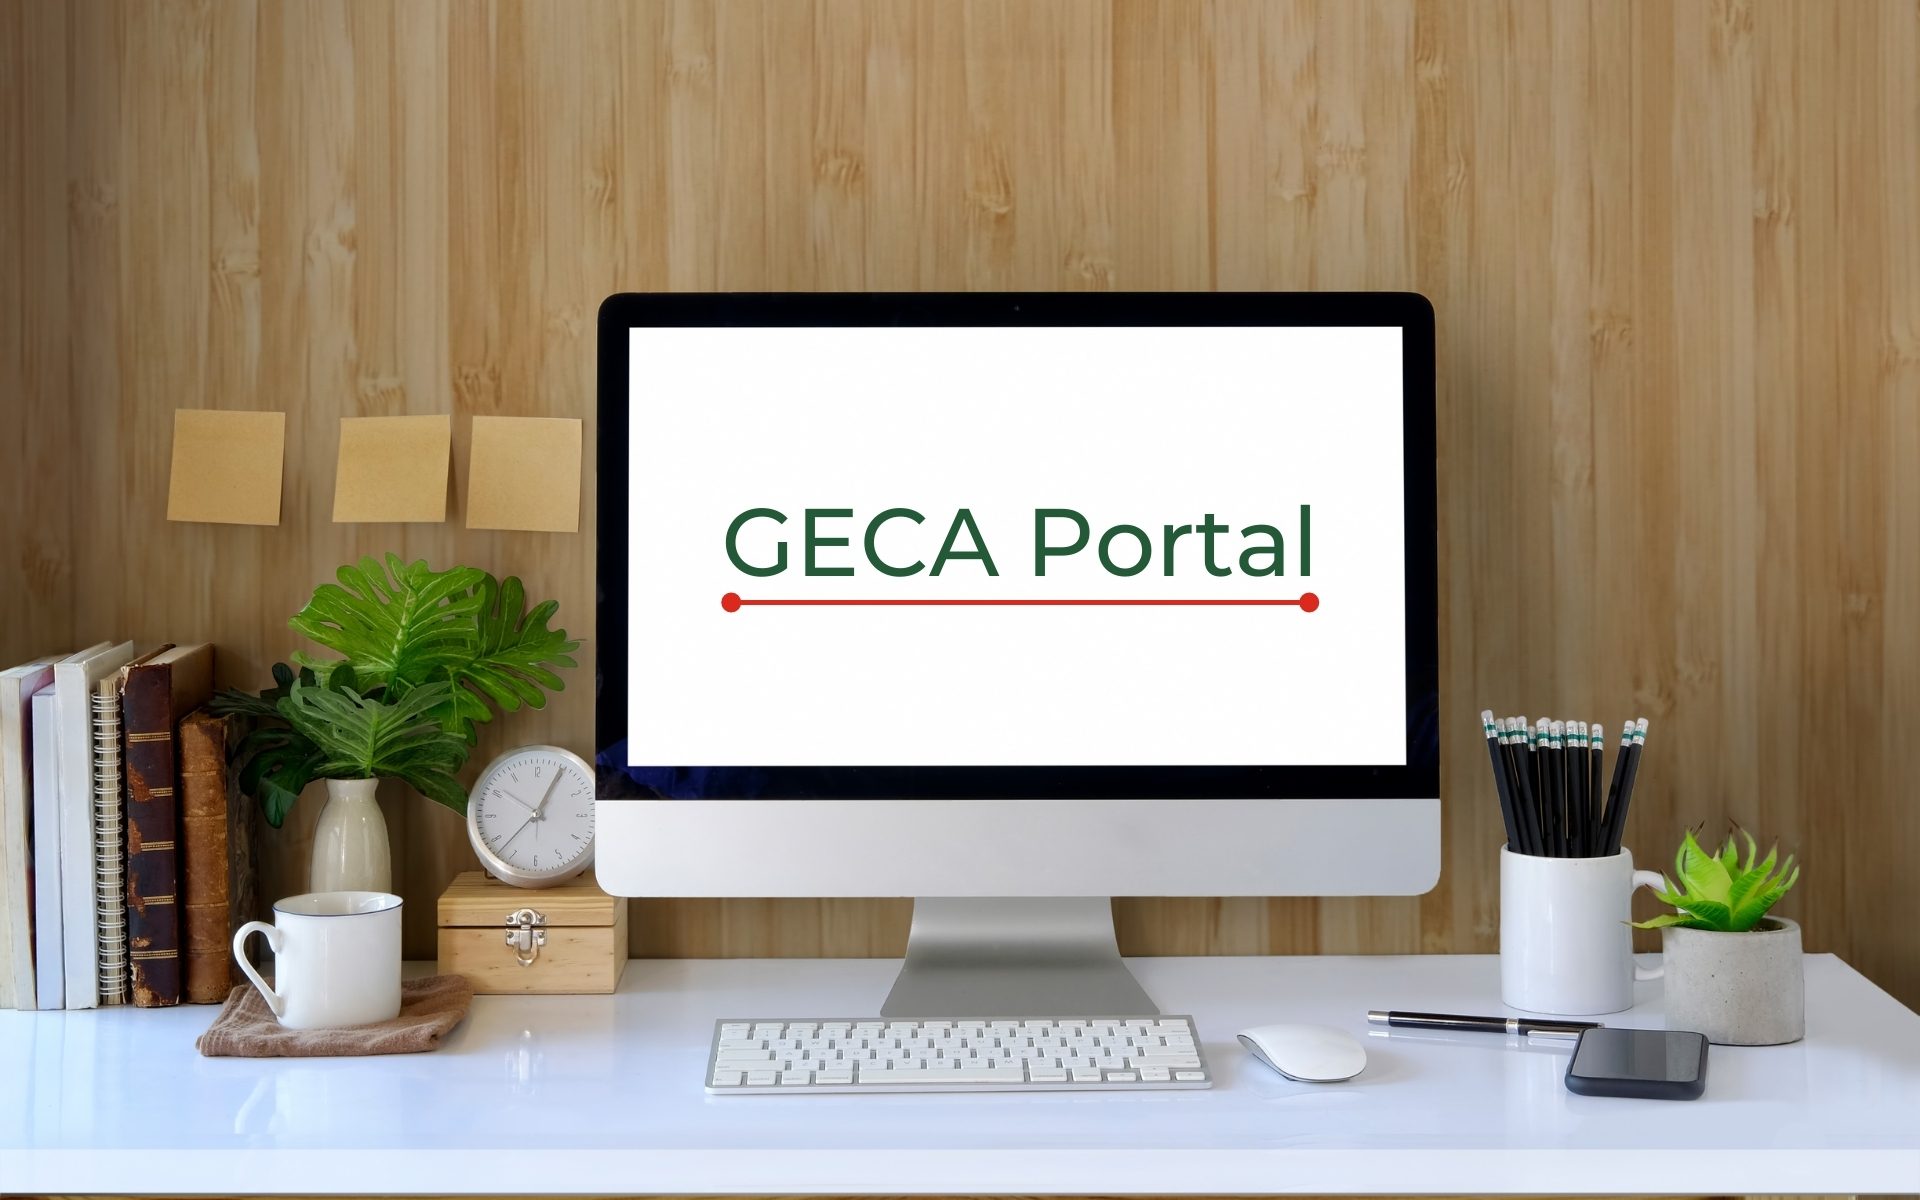 GECA Portal